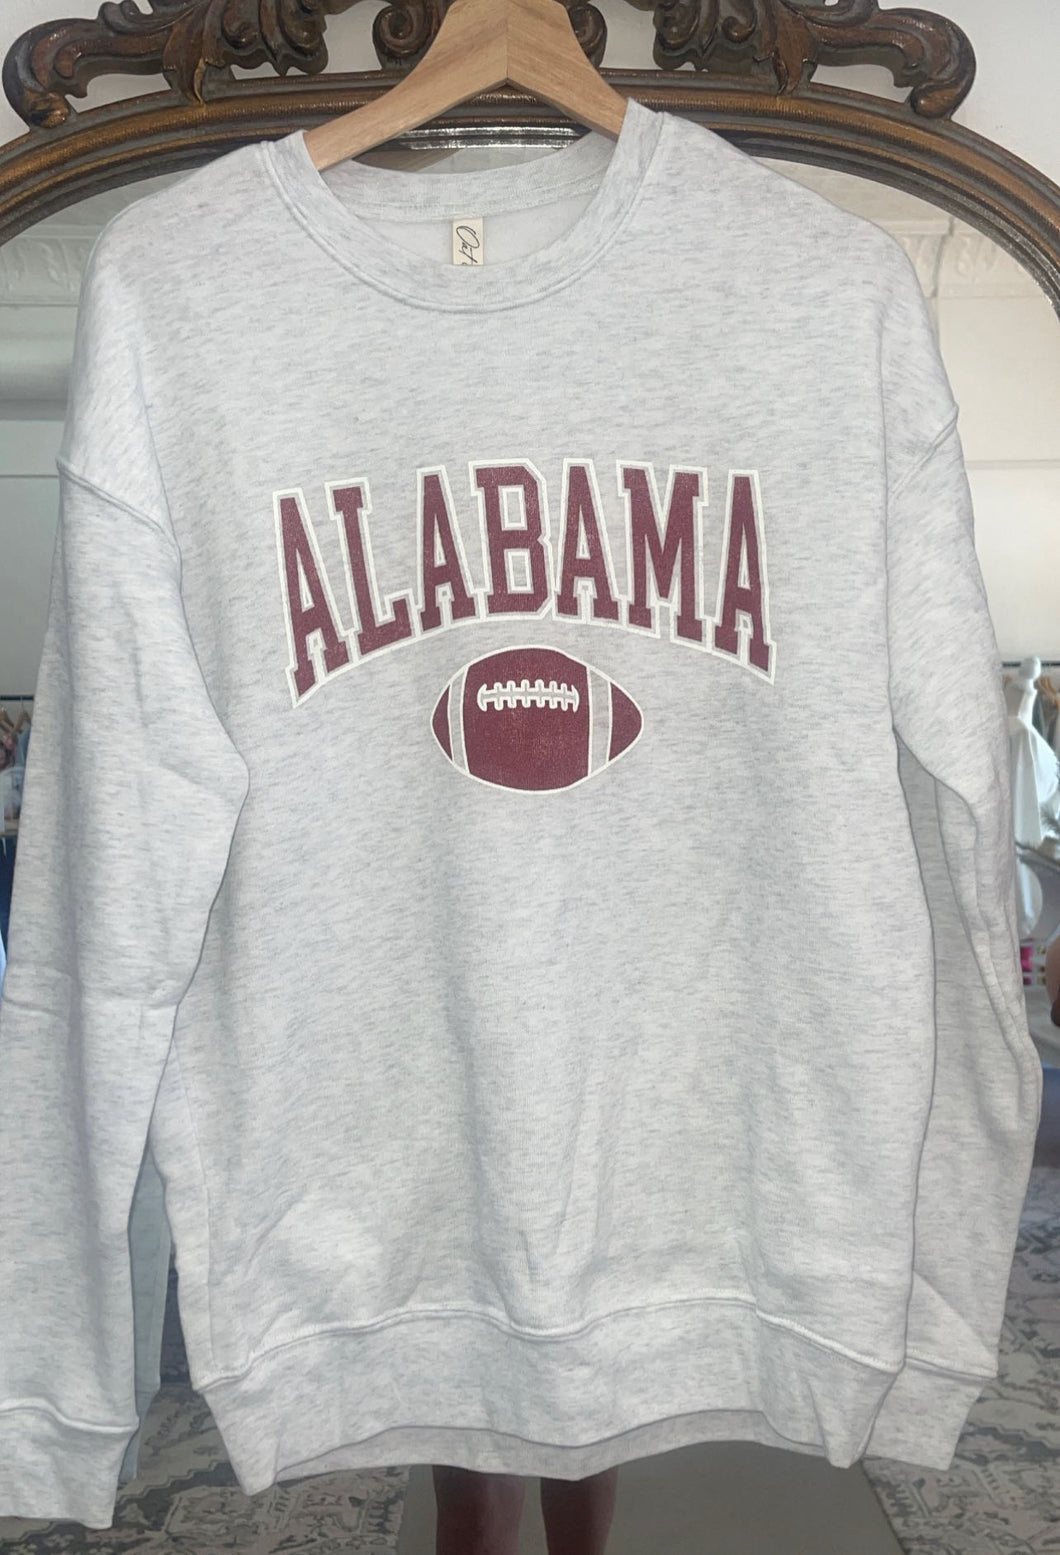 Alabama Sweatshirt